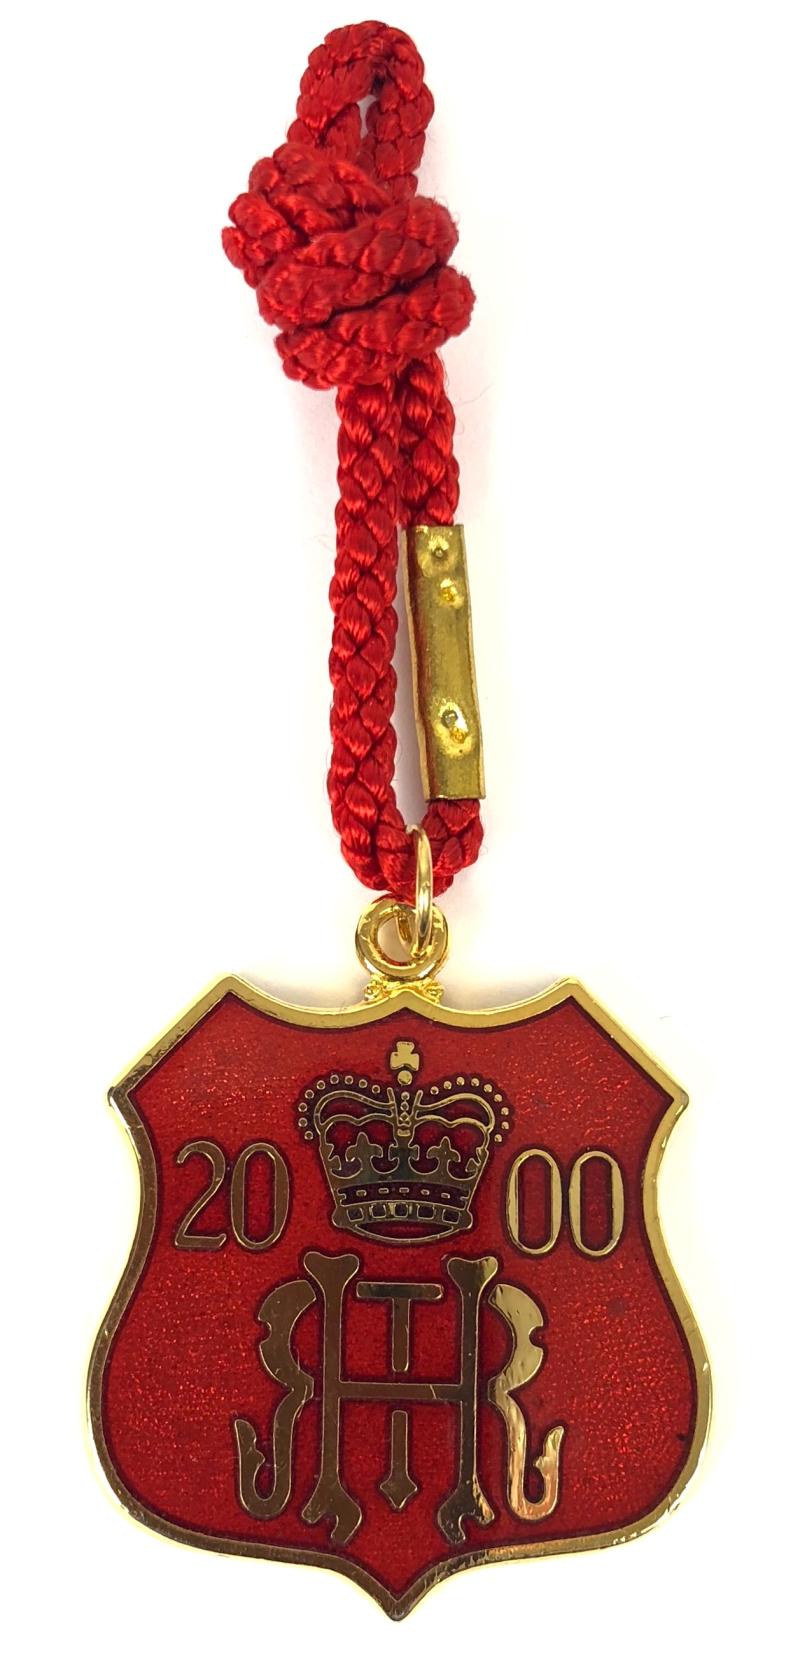 2000 Henley Royal Regatta stewards enclosure millennium badge